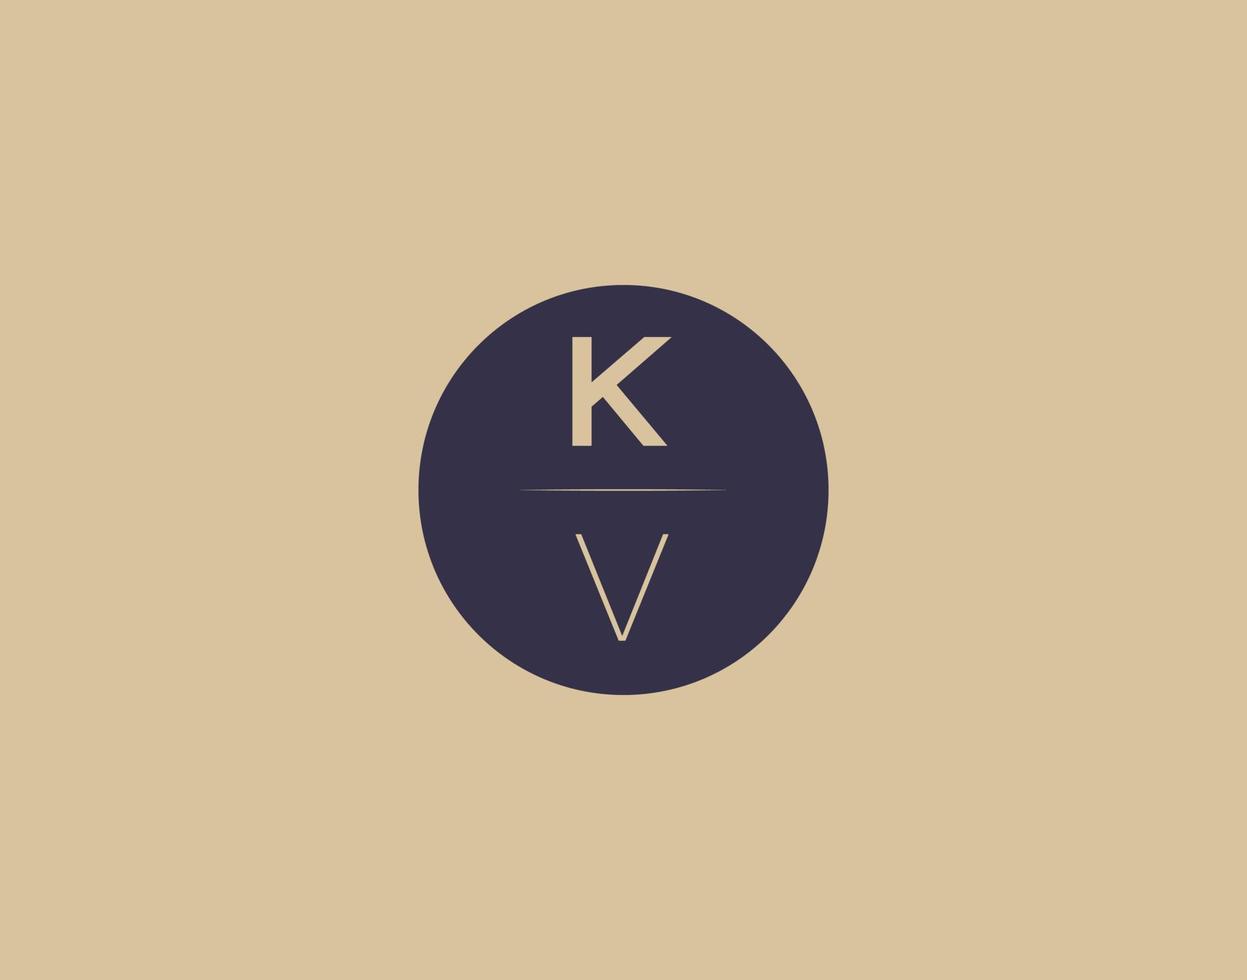 kv brev modern elegant logotyp design vektor bilder